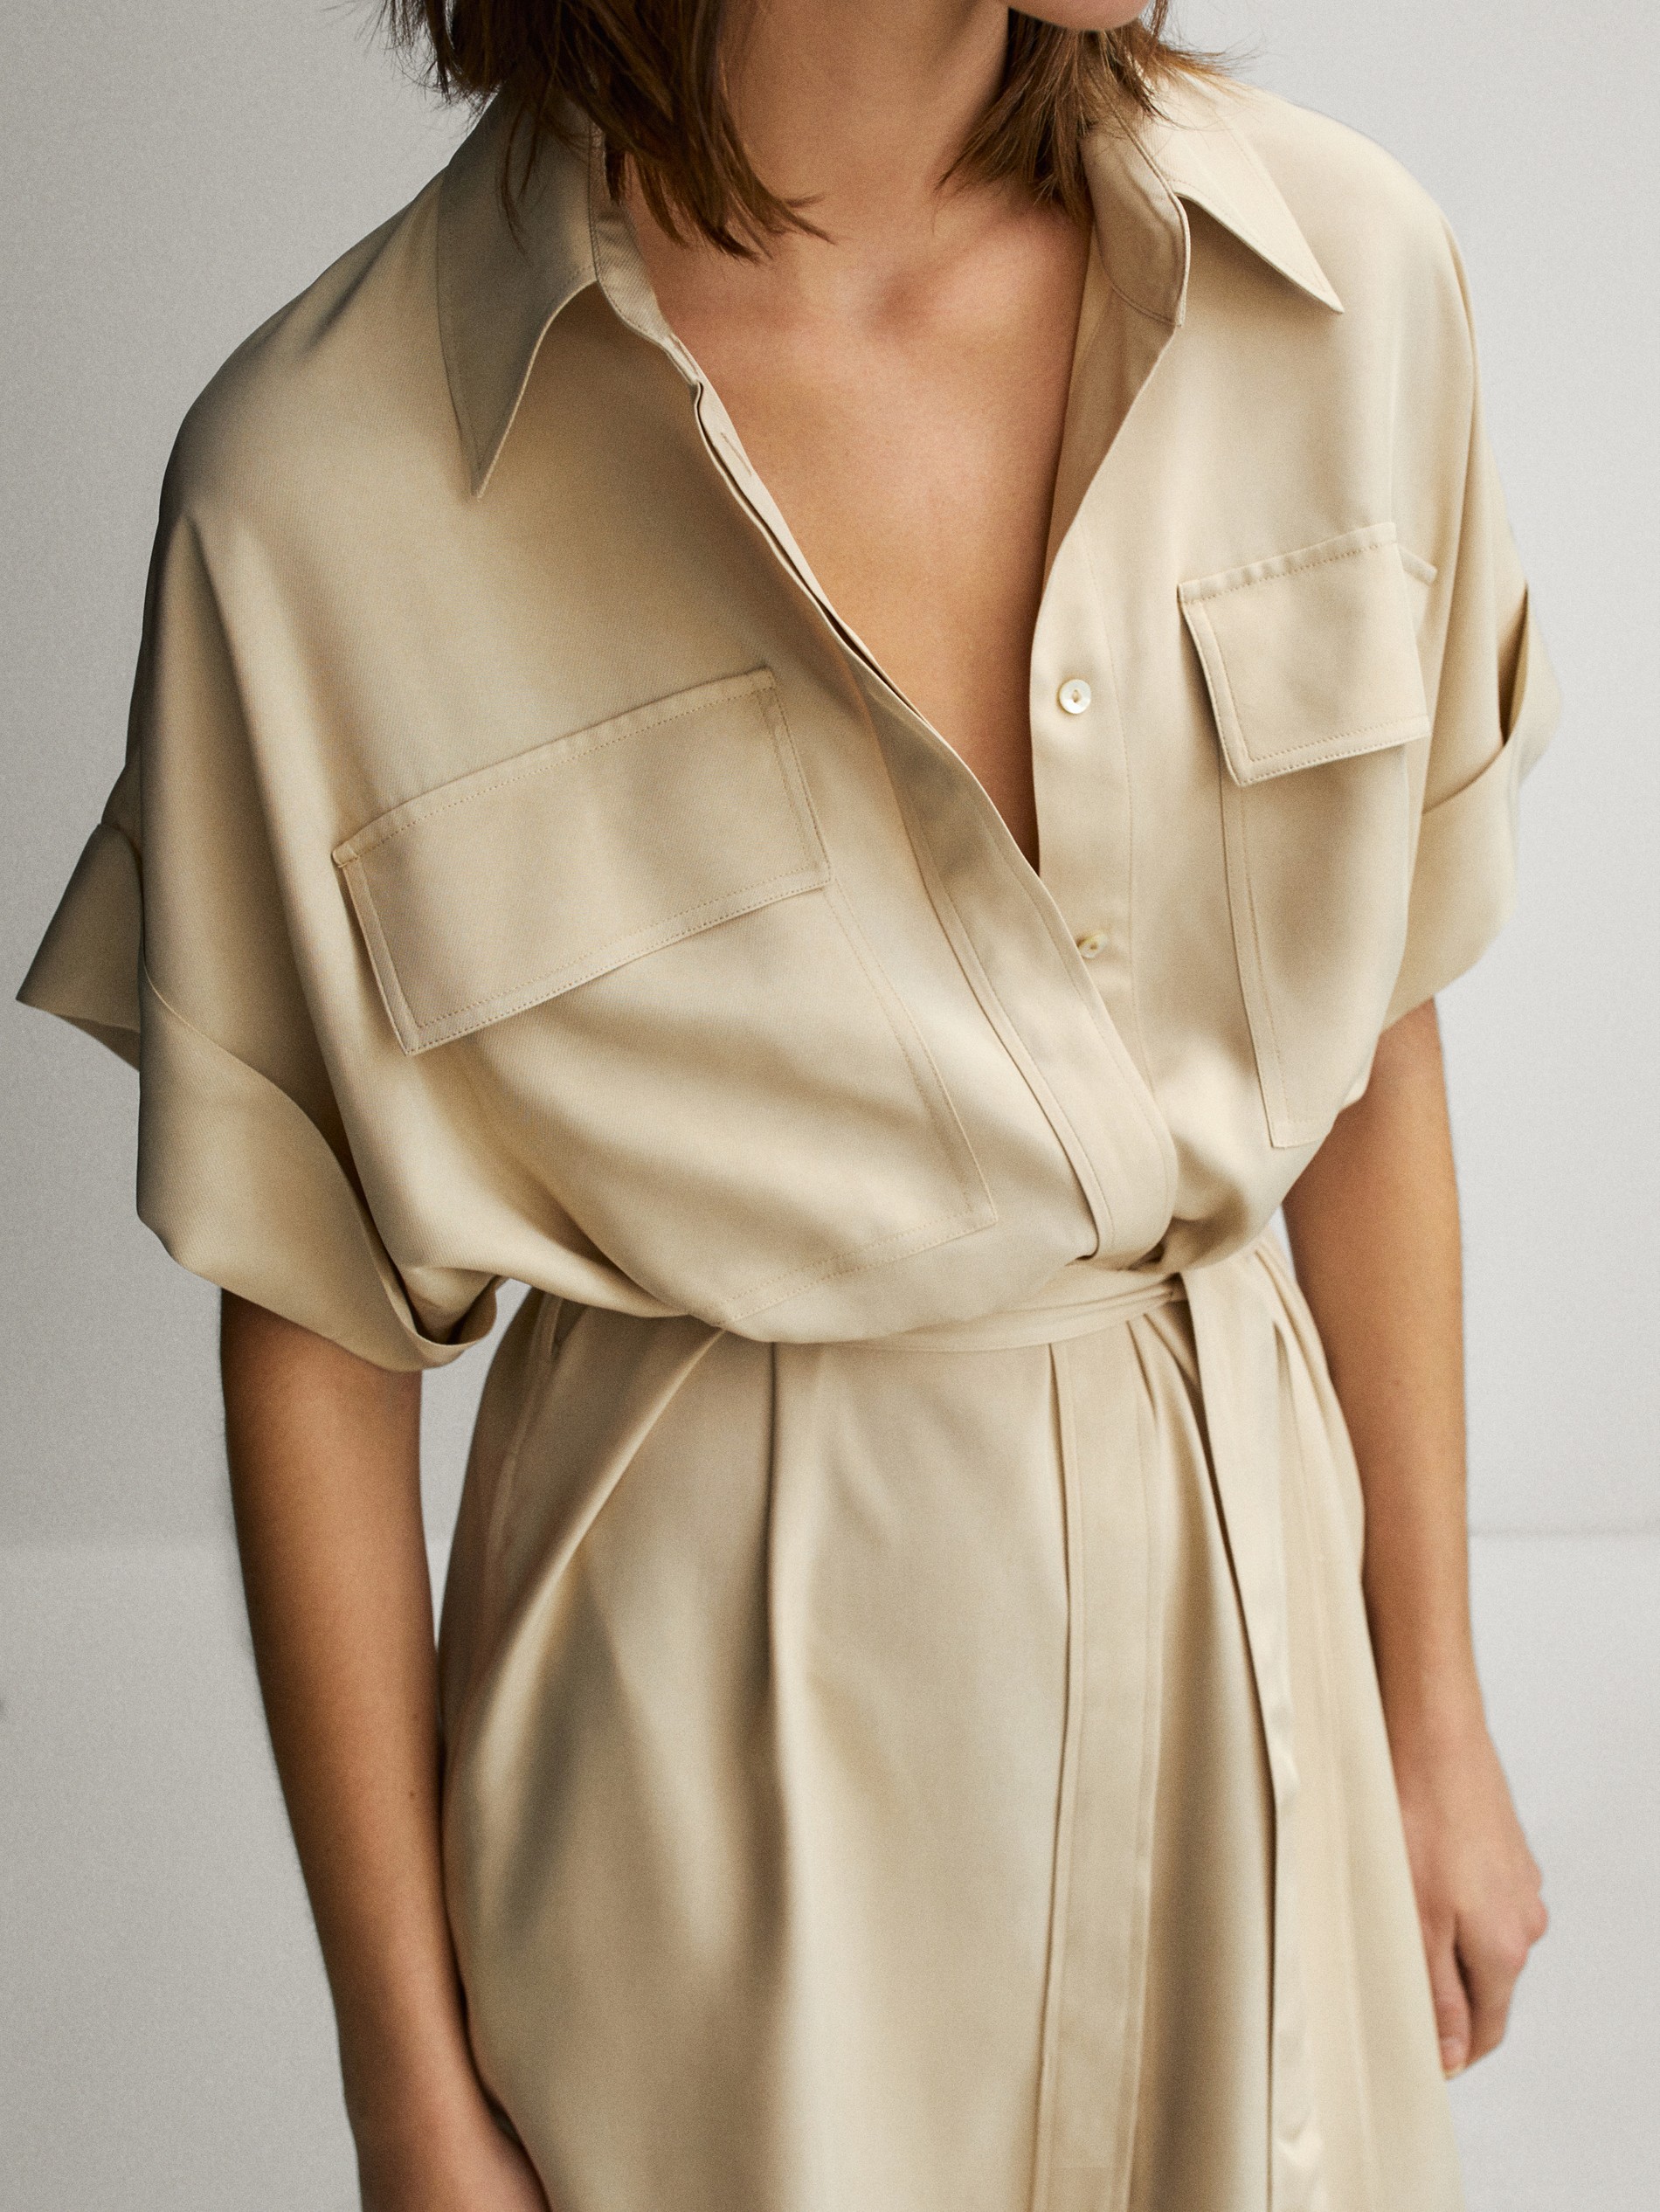 Massimo Dutti - Shirt dress featuring ...